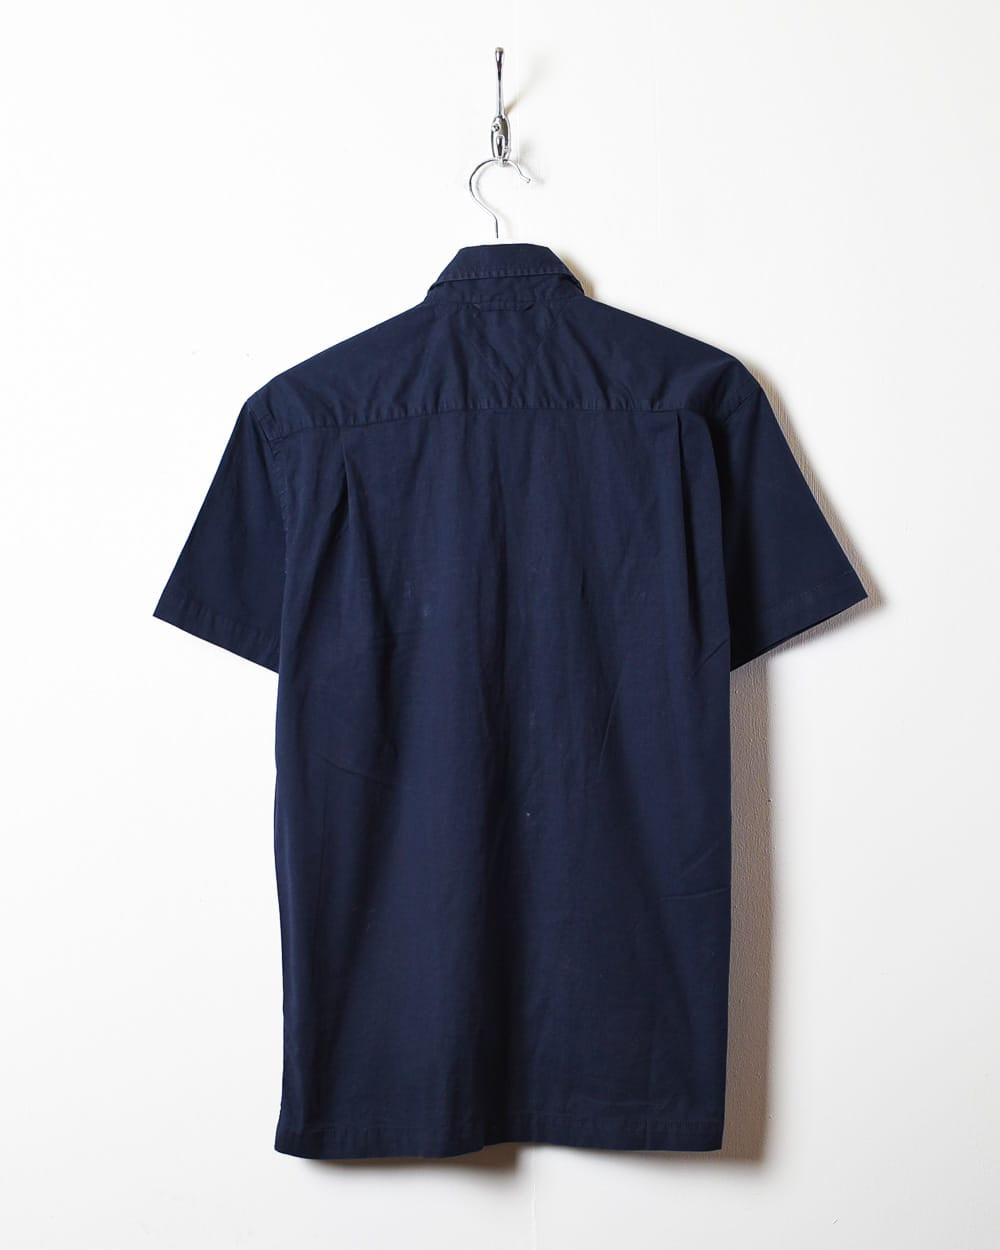 Navy Tommy Hilfiger Short Sleeved Shirt - Small